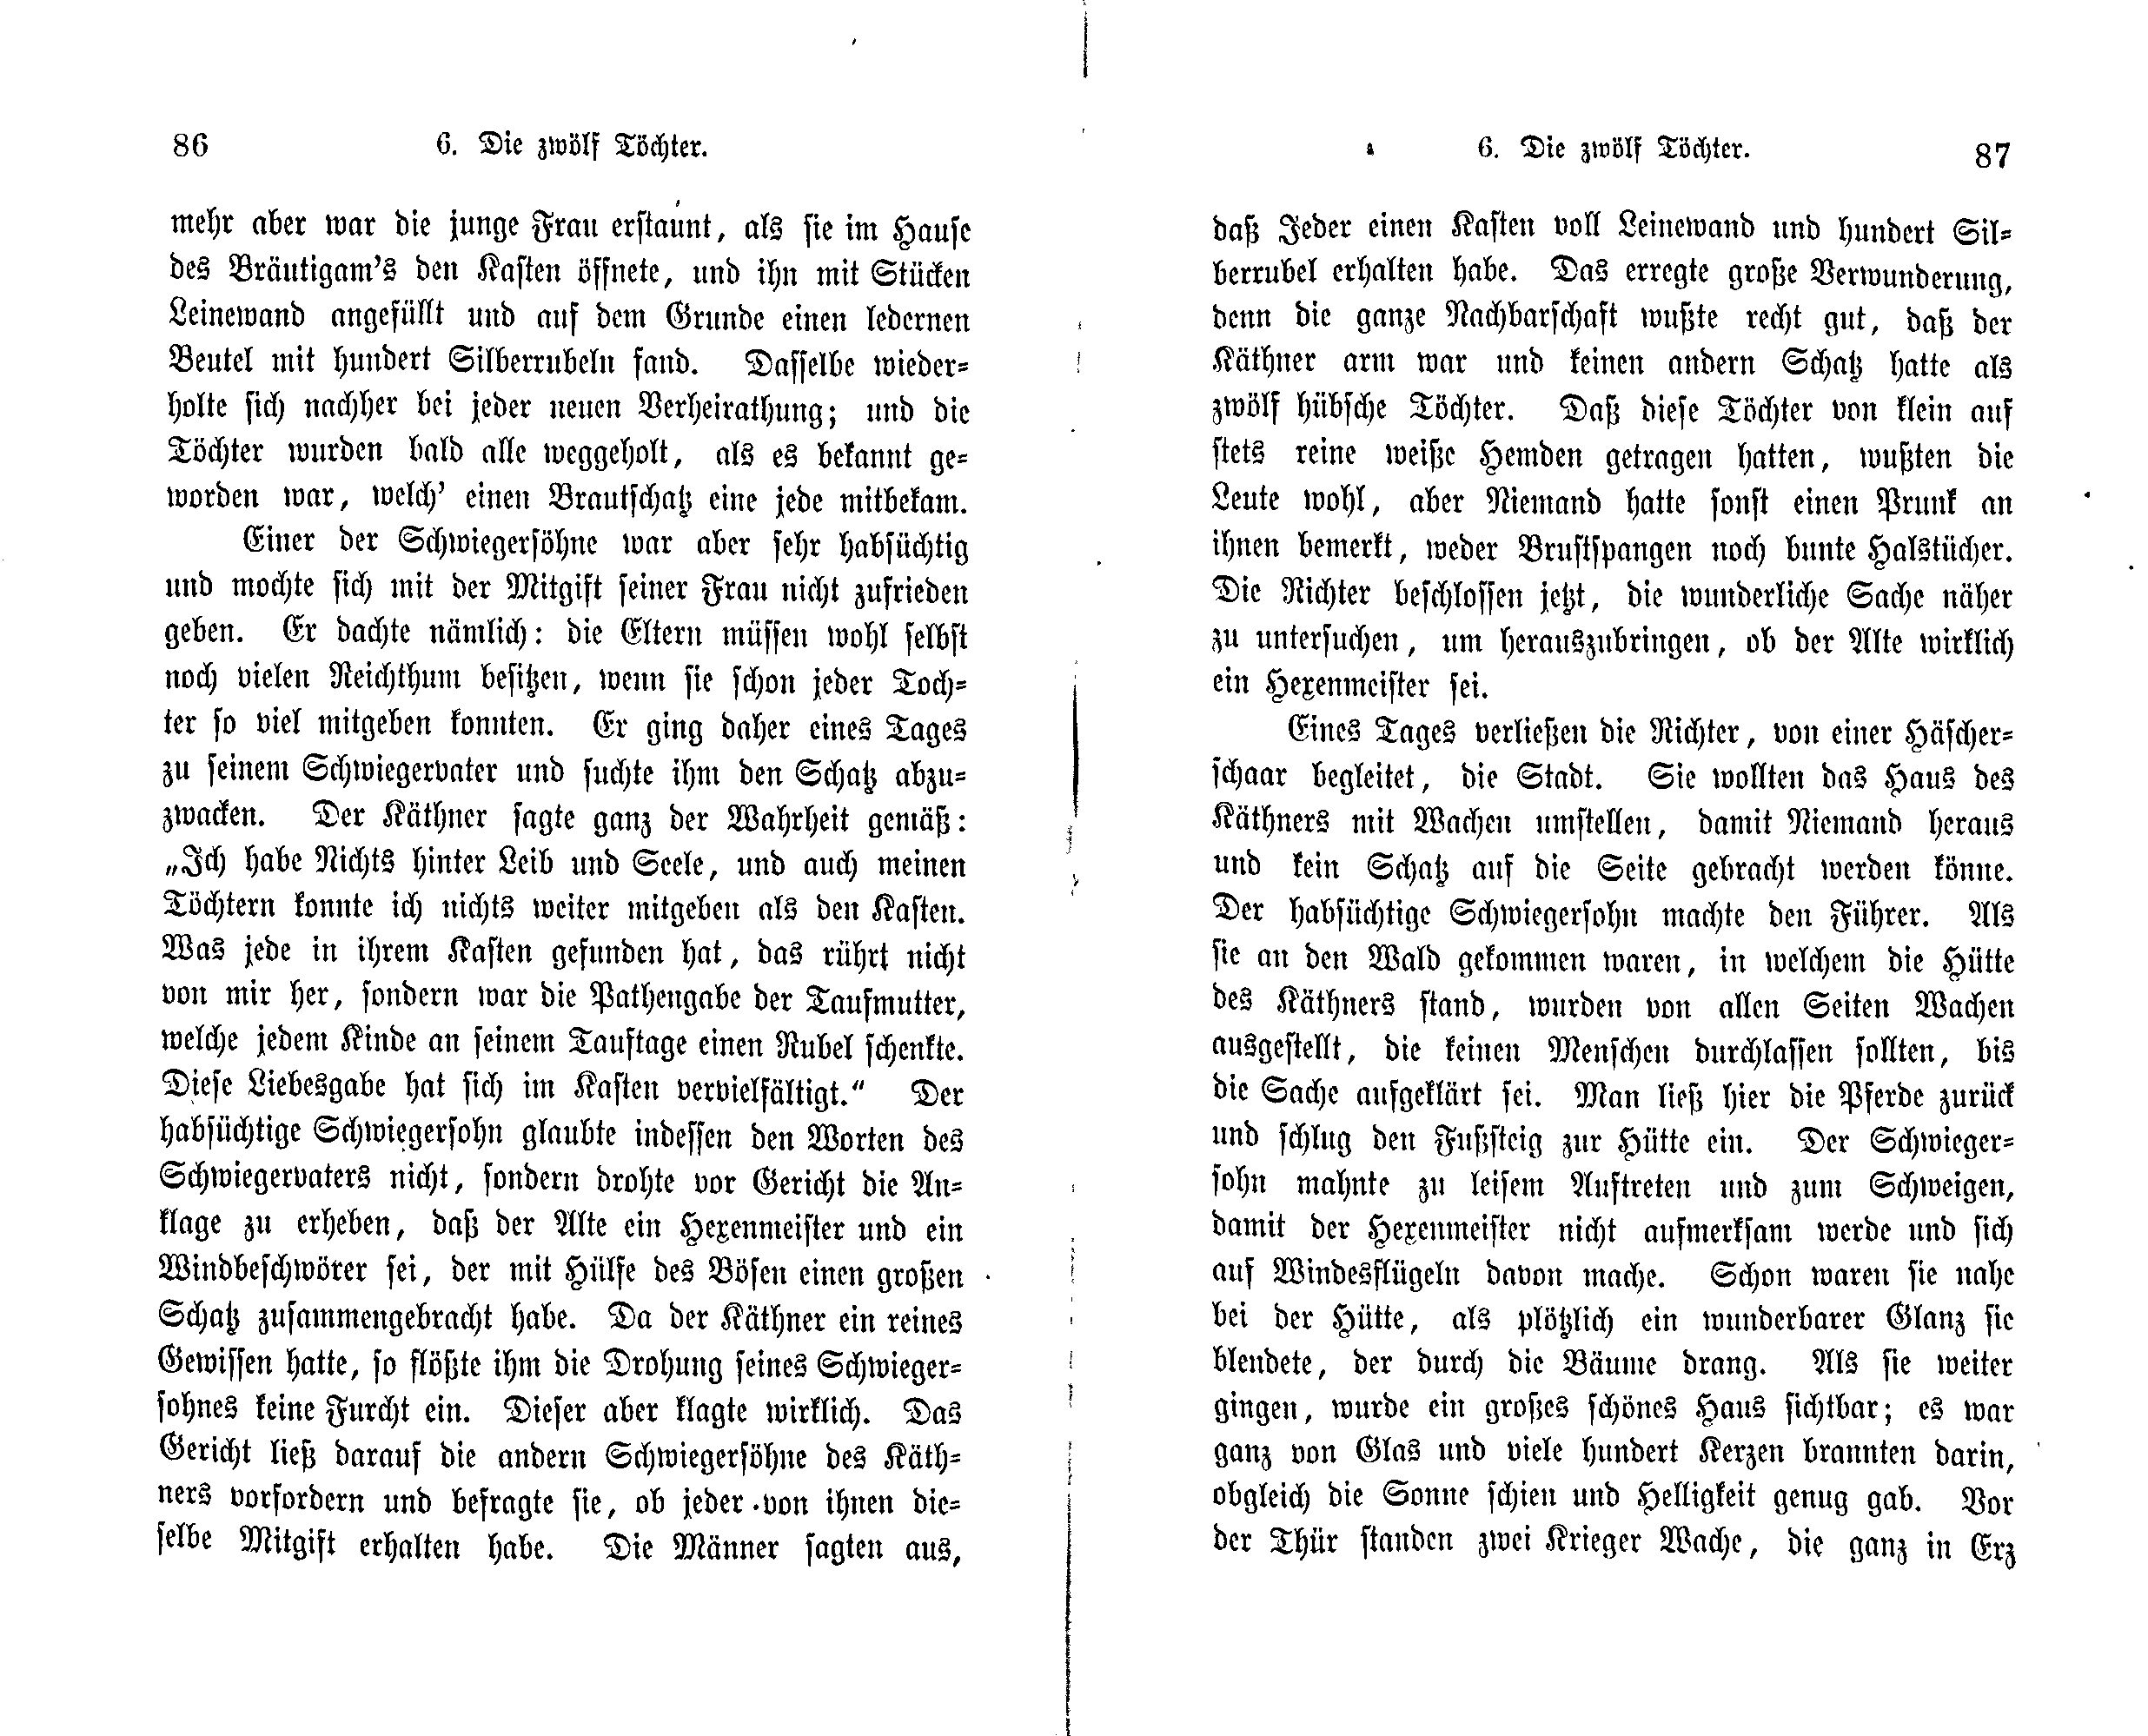 Estnische Märchen [1] (1869) | 48. (86-87) Main body of text